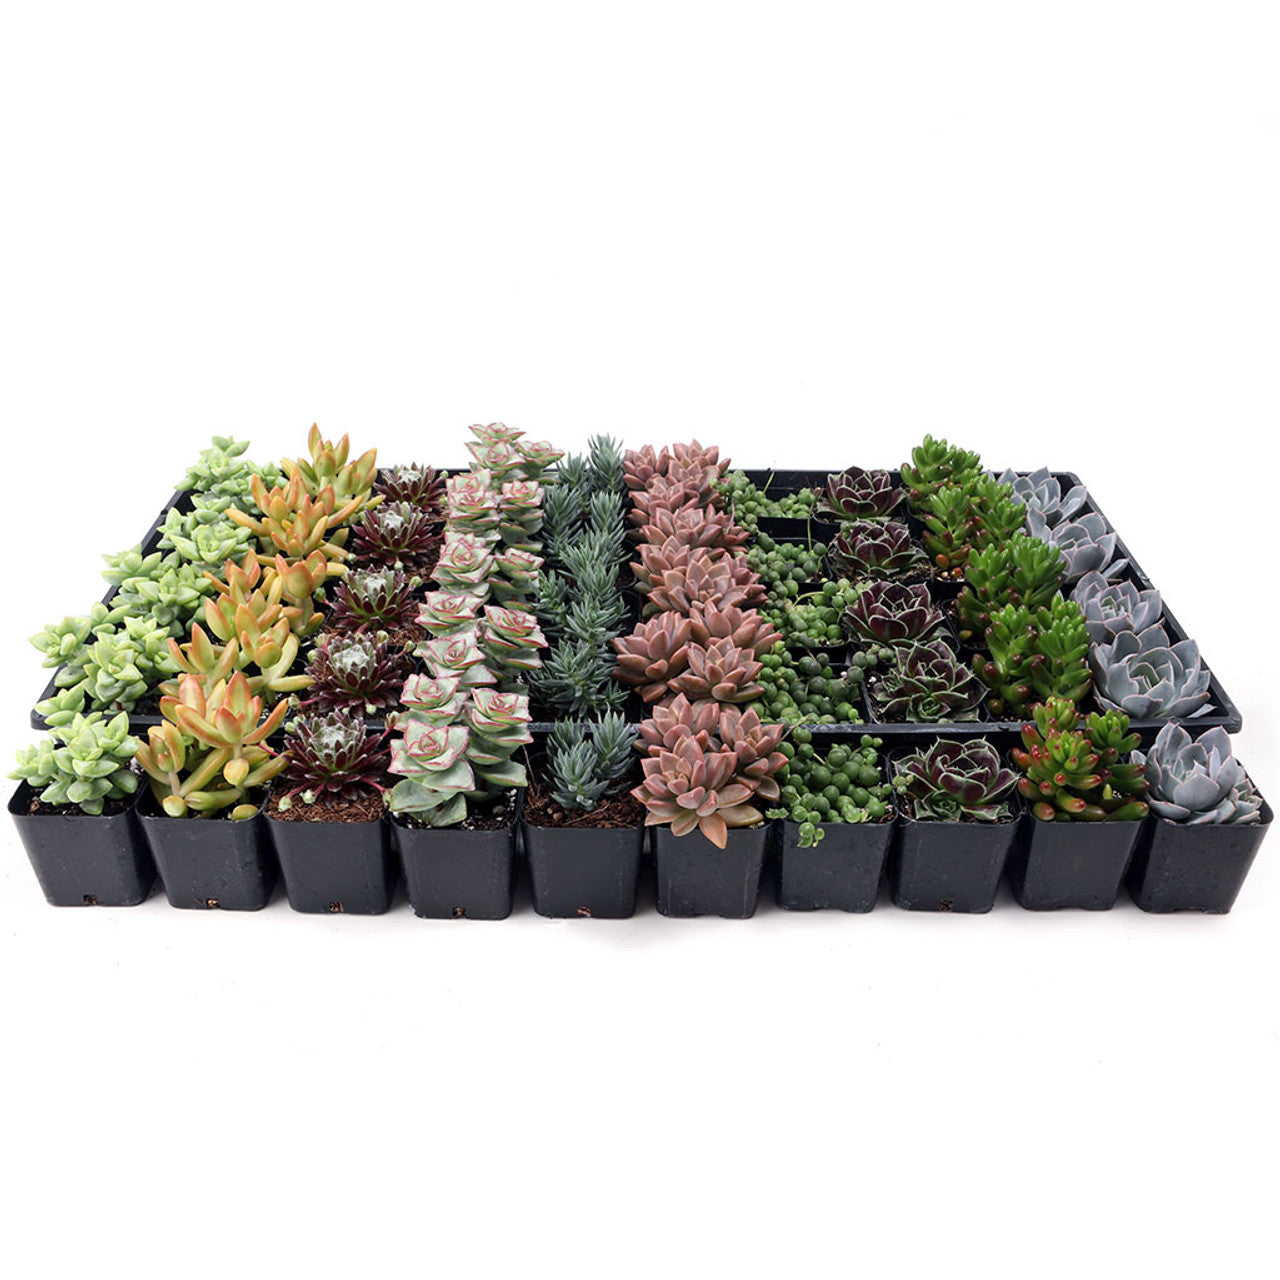 Succulent Sampler 50-Pack - 10 Varieties - 2" Pots